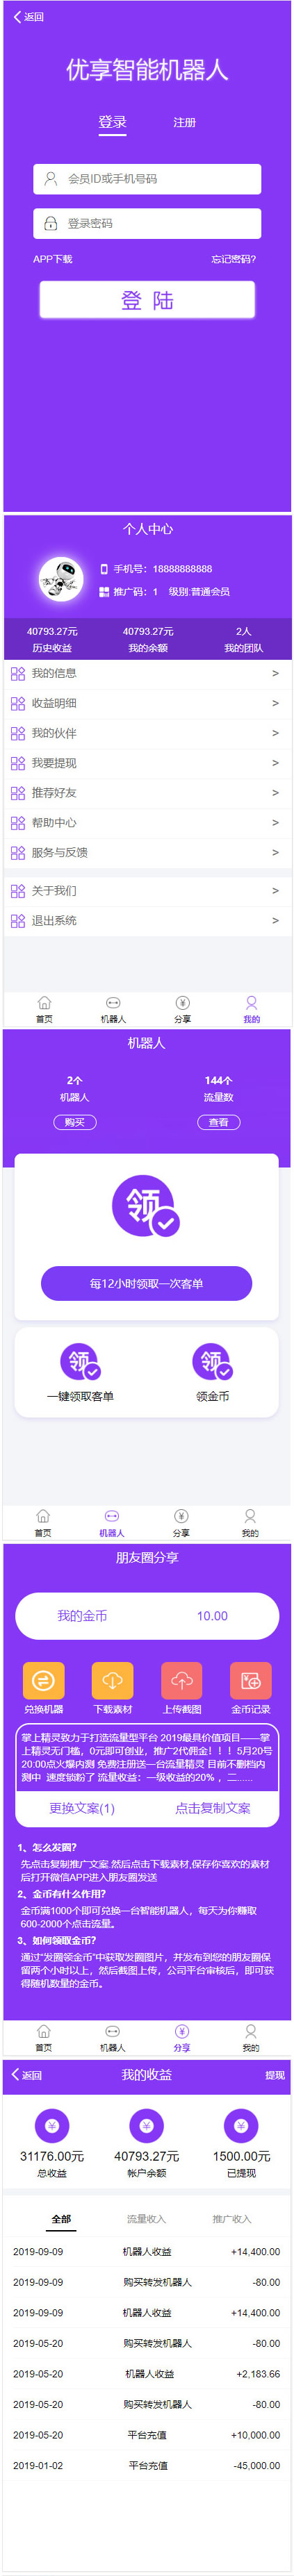 PHP紫色UI优享智能广告系统云点自动挂机赚钱AI机器人合约系统3.0版源码-爱资源分享